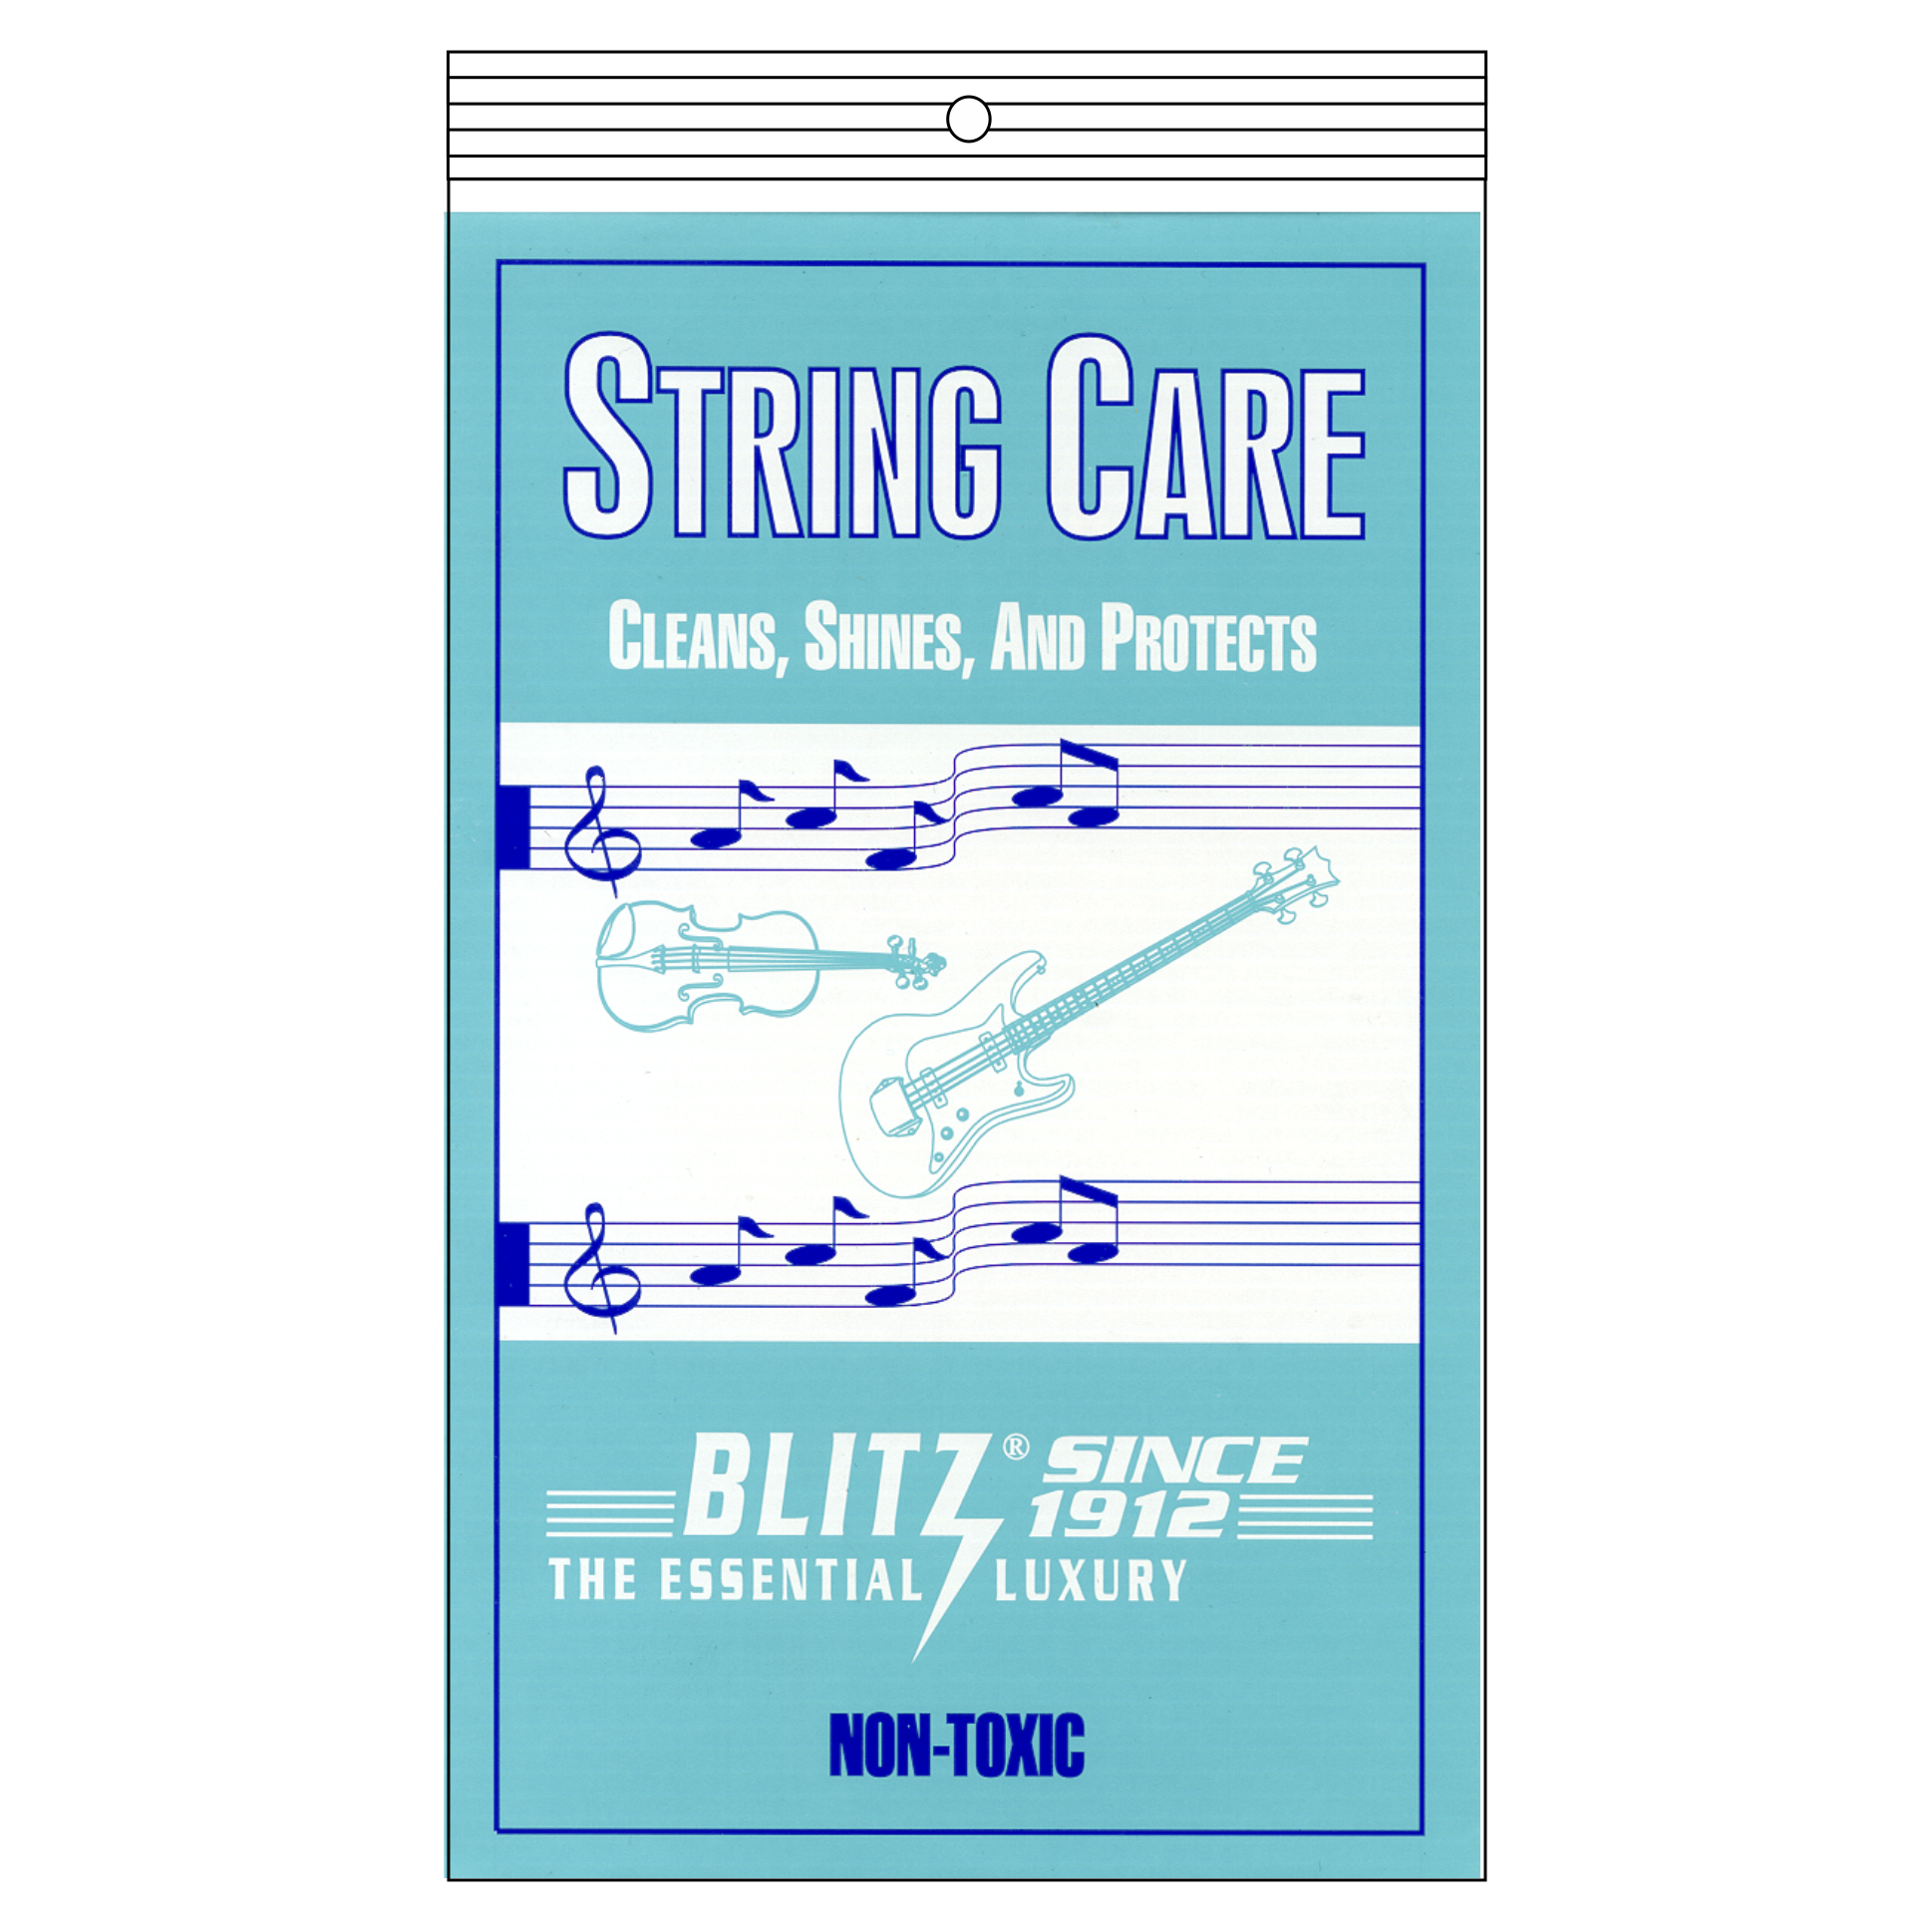 Blitz Metal Care Instrument Polishing Cloth